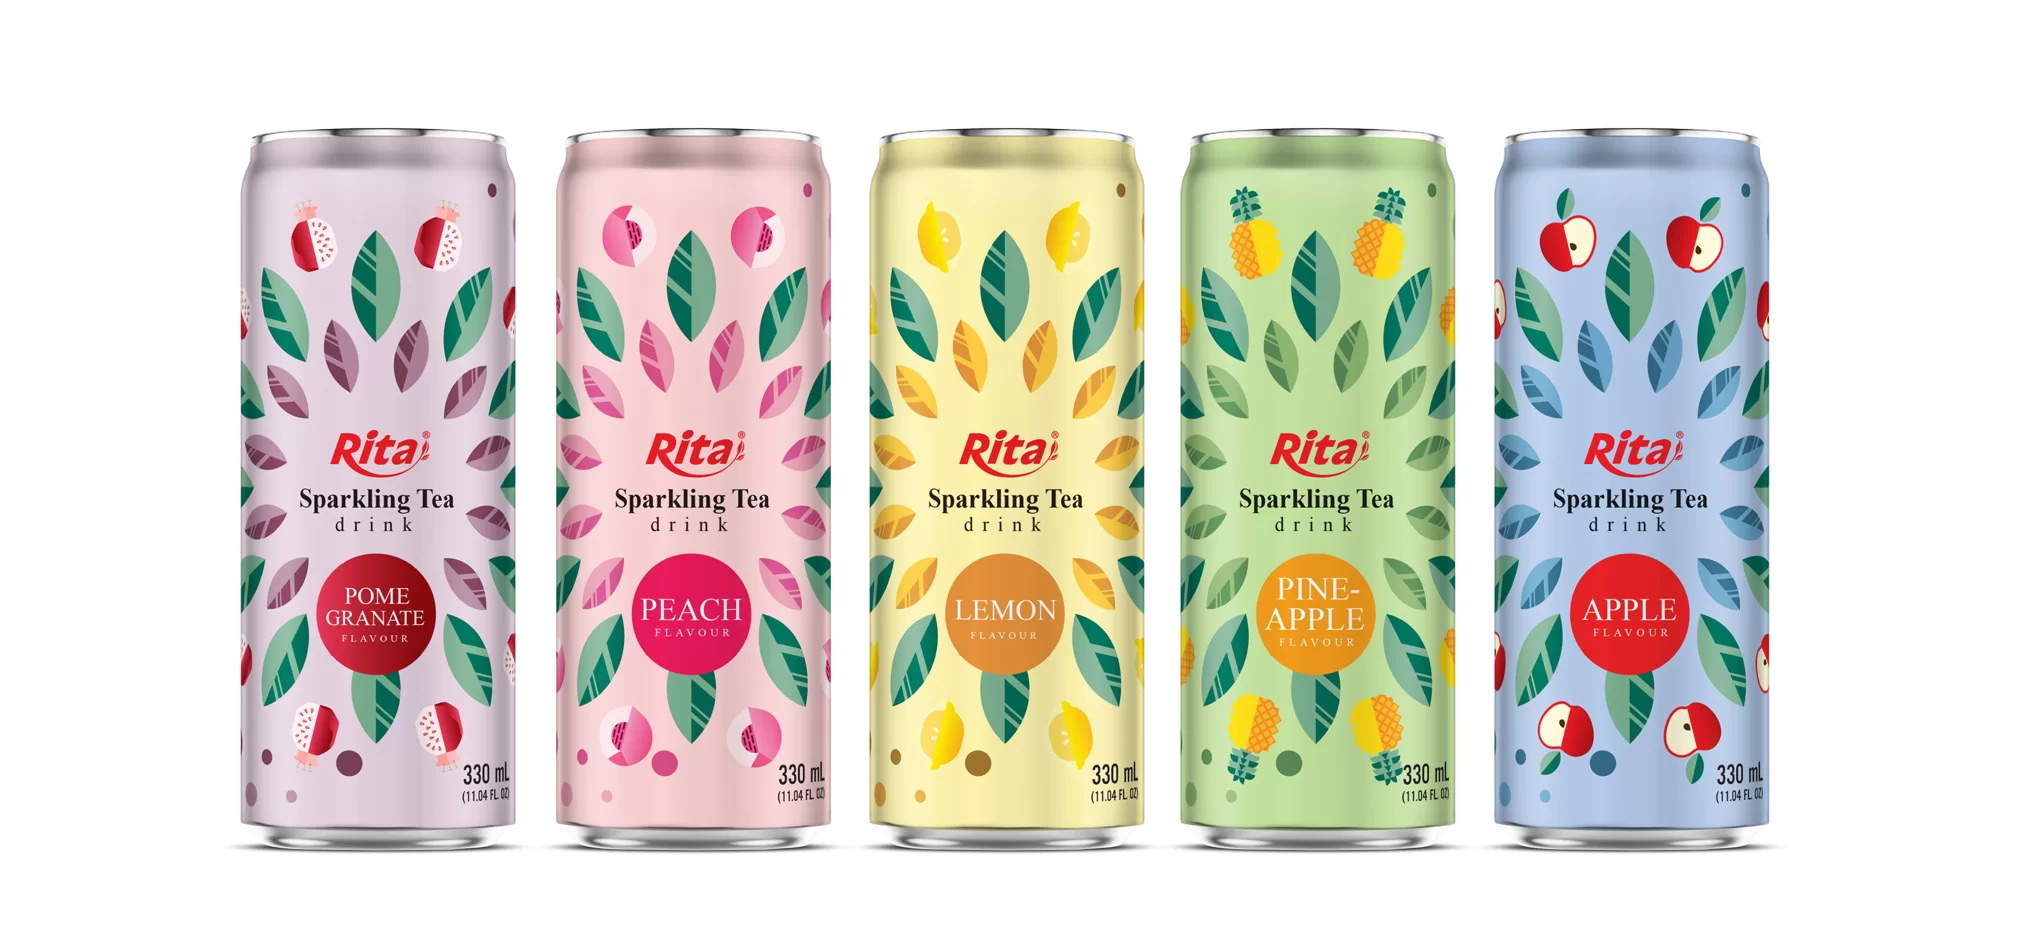 Poster Sparkling Tea drink 330ml sleek can RITA beverage company